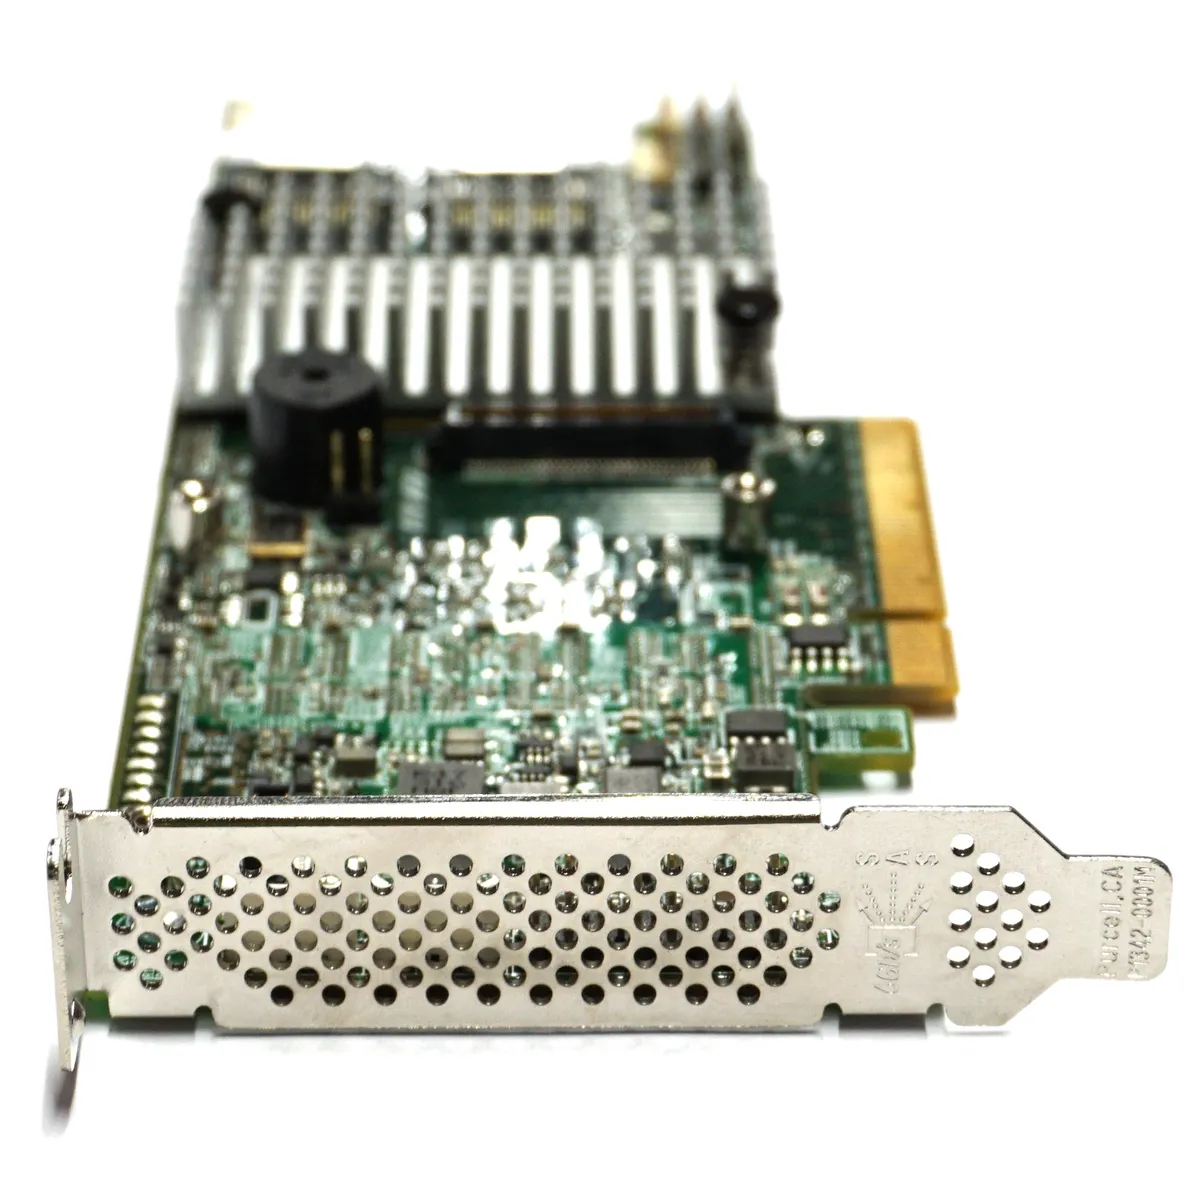 Cisco LSI 9266CV-8i - LP PCIe-x8 SAS RAID Controller